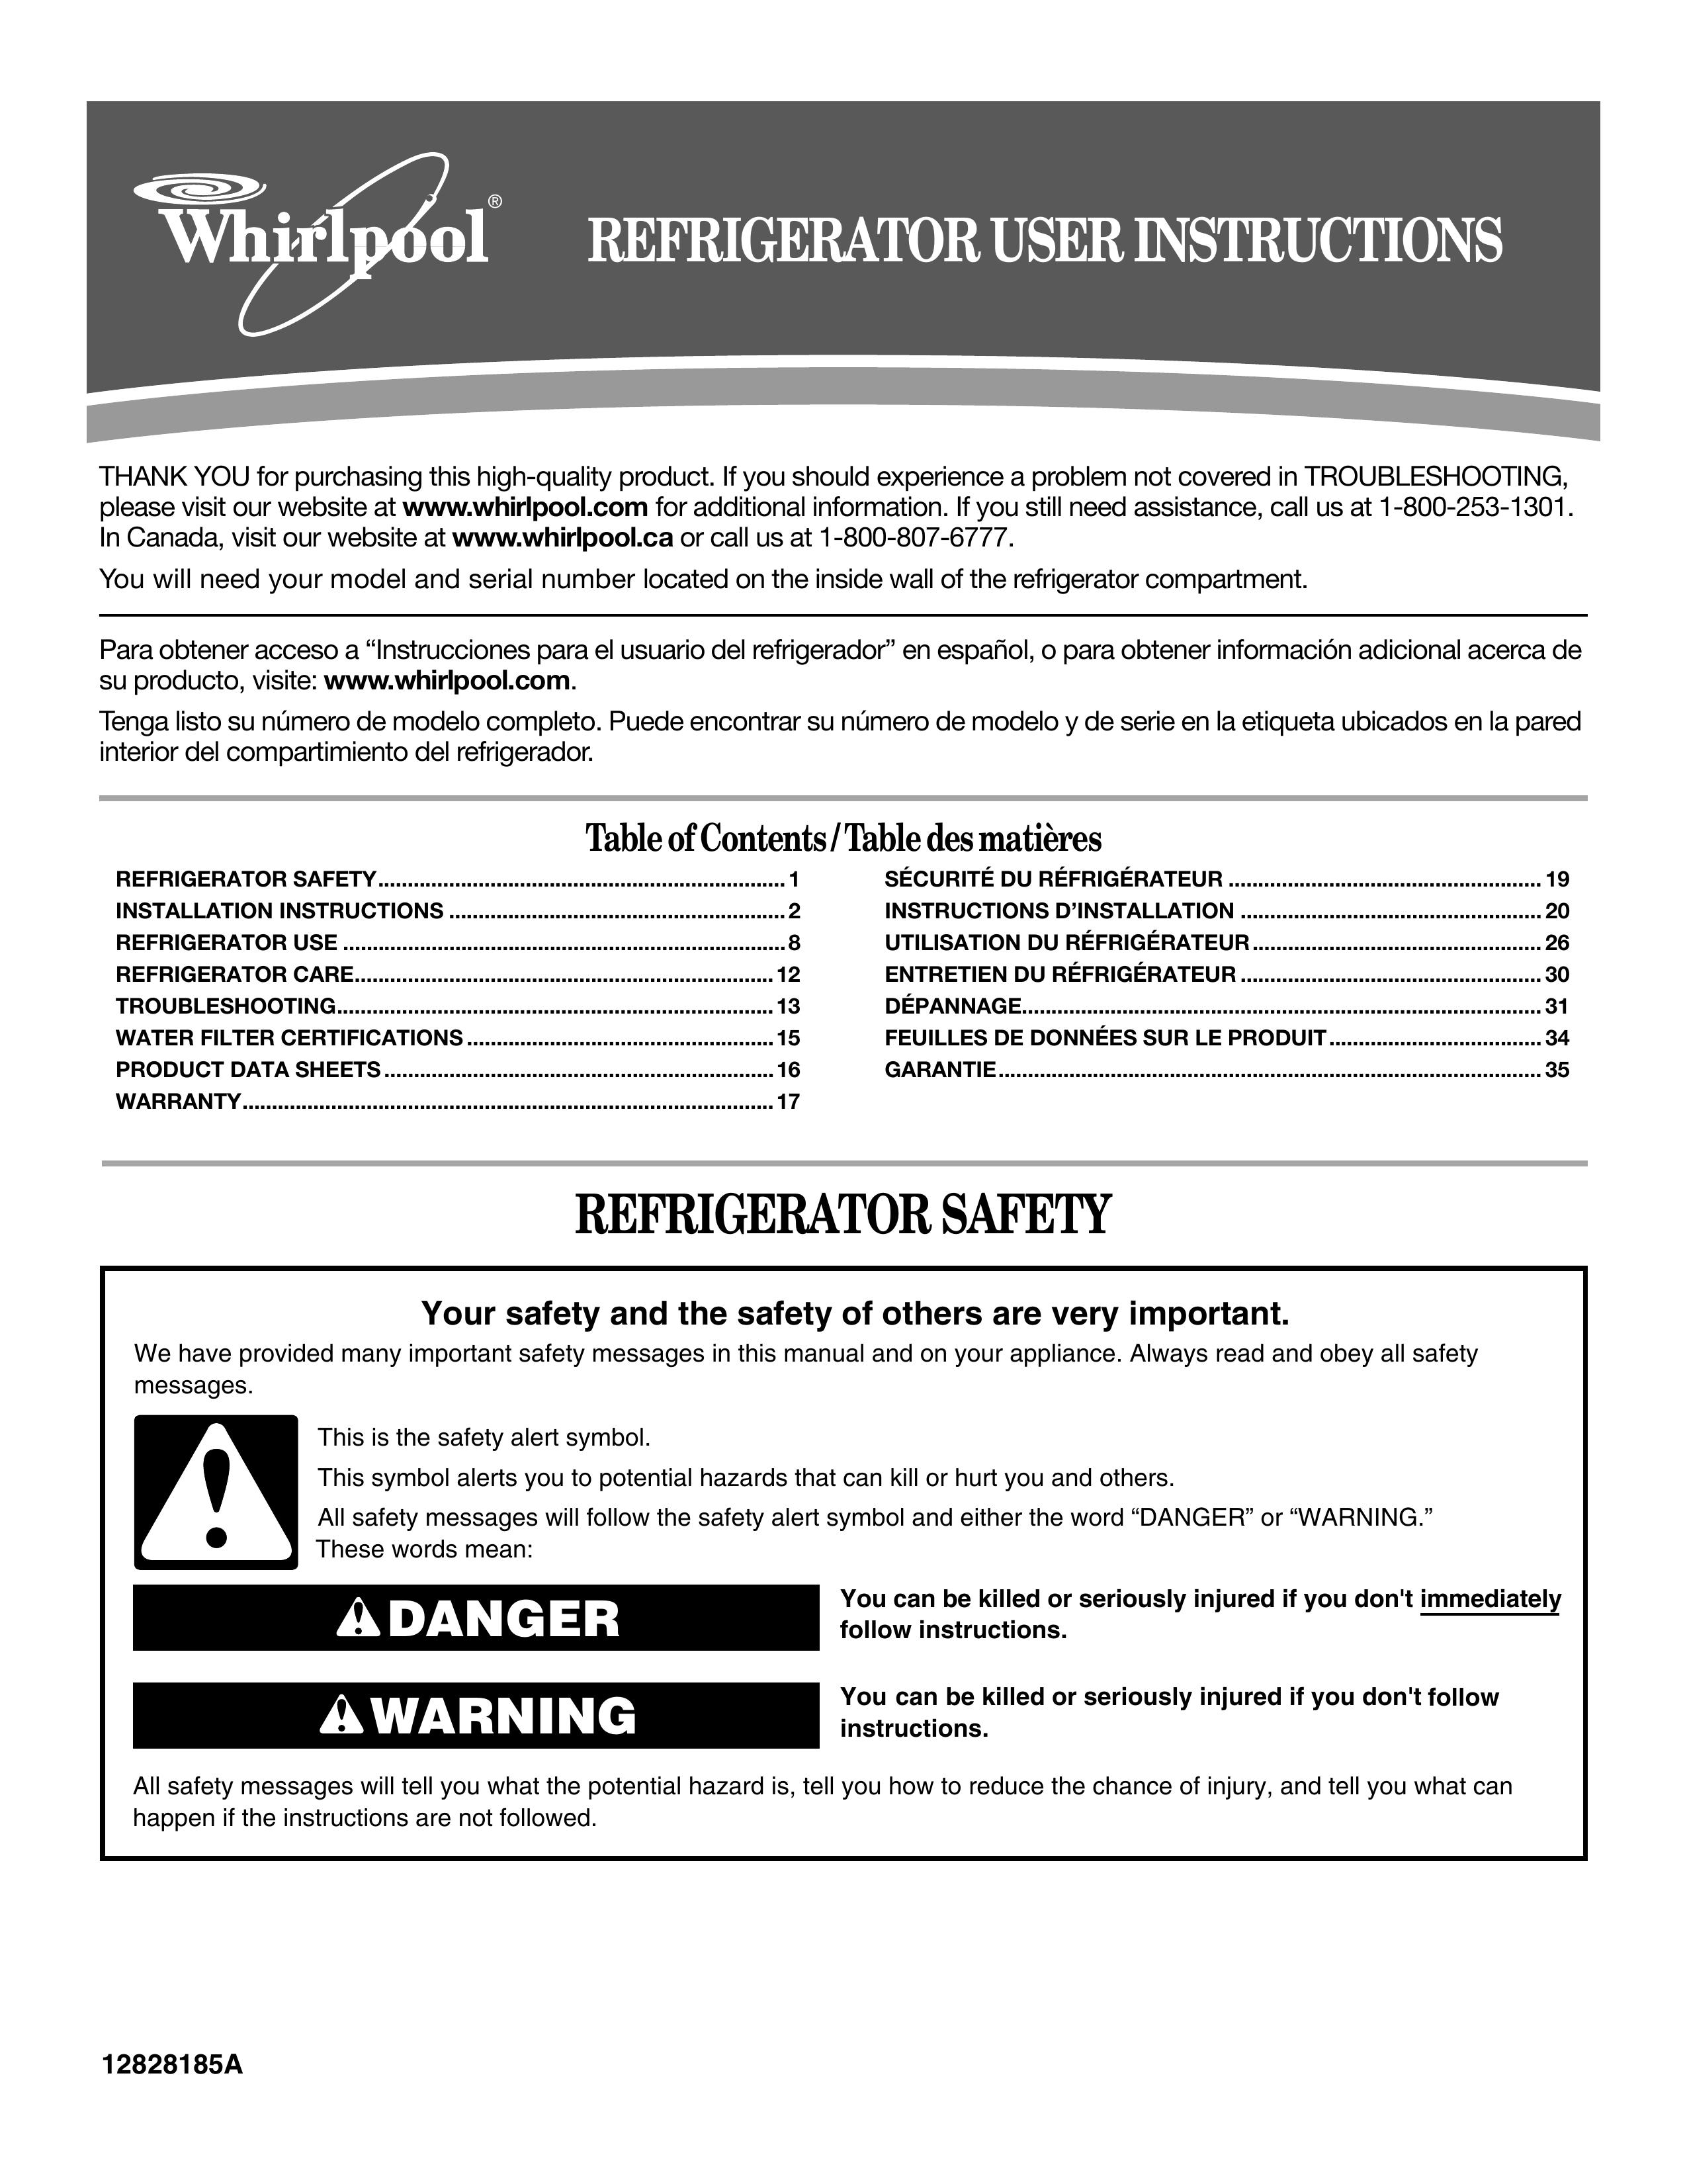 Whirlpool 12828185A Refrigerator User Manual